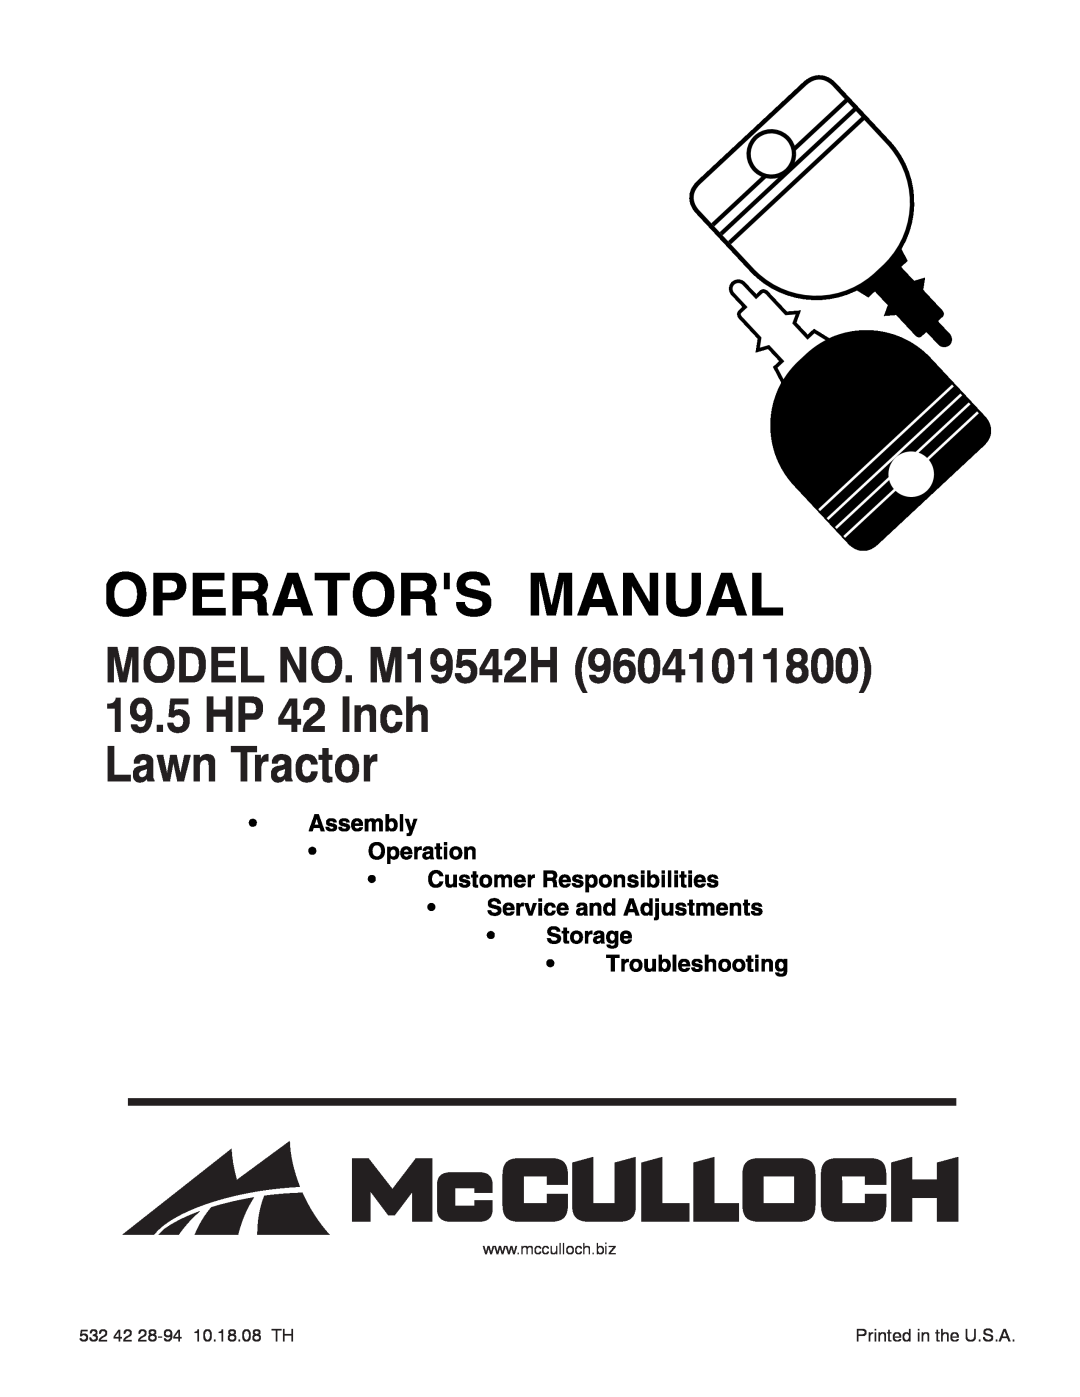 McCulloch manual MODEL NO. M19542H 19.5HP 42 Inch Lawn Tractor, 532 42 28-9410.18.08 TH 